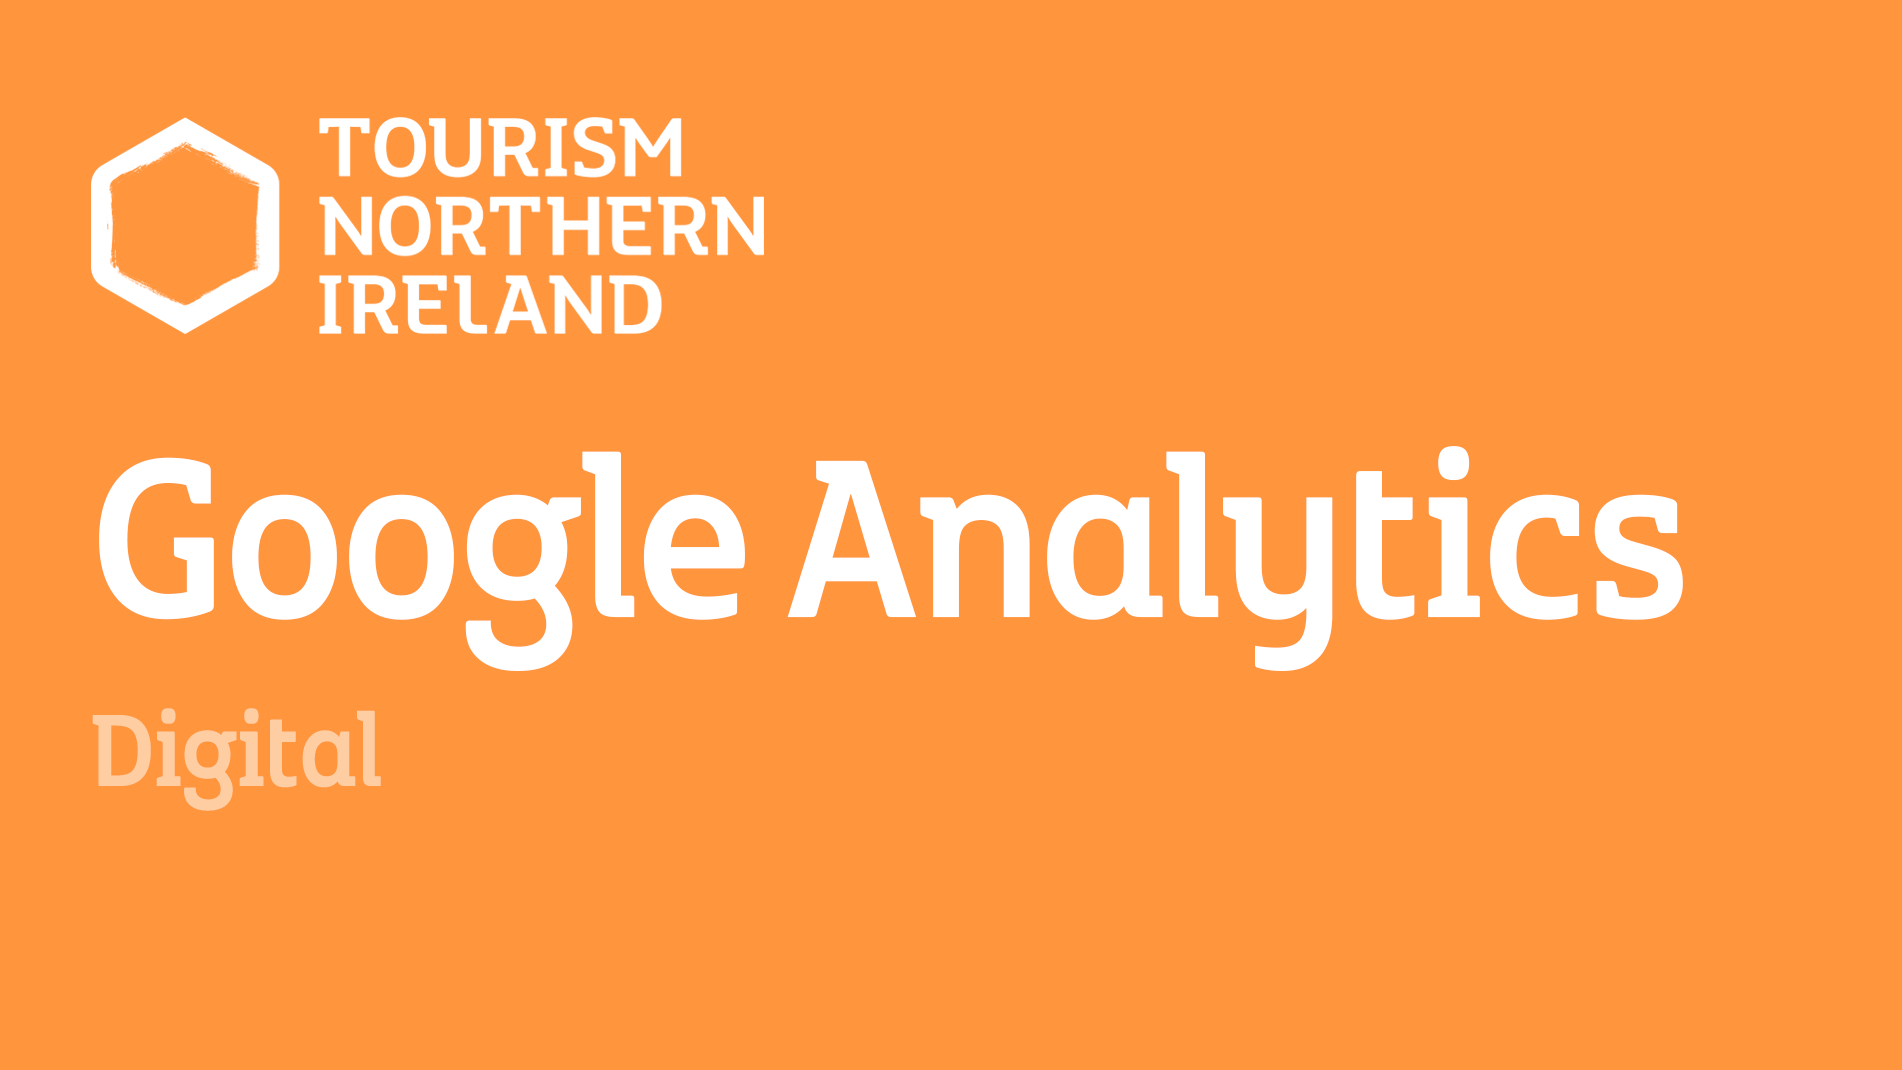 Google Analytics for Tourism Businesses